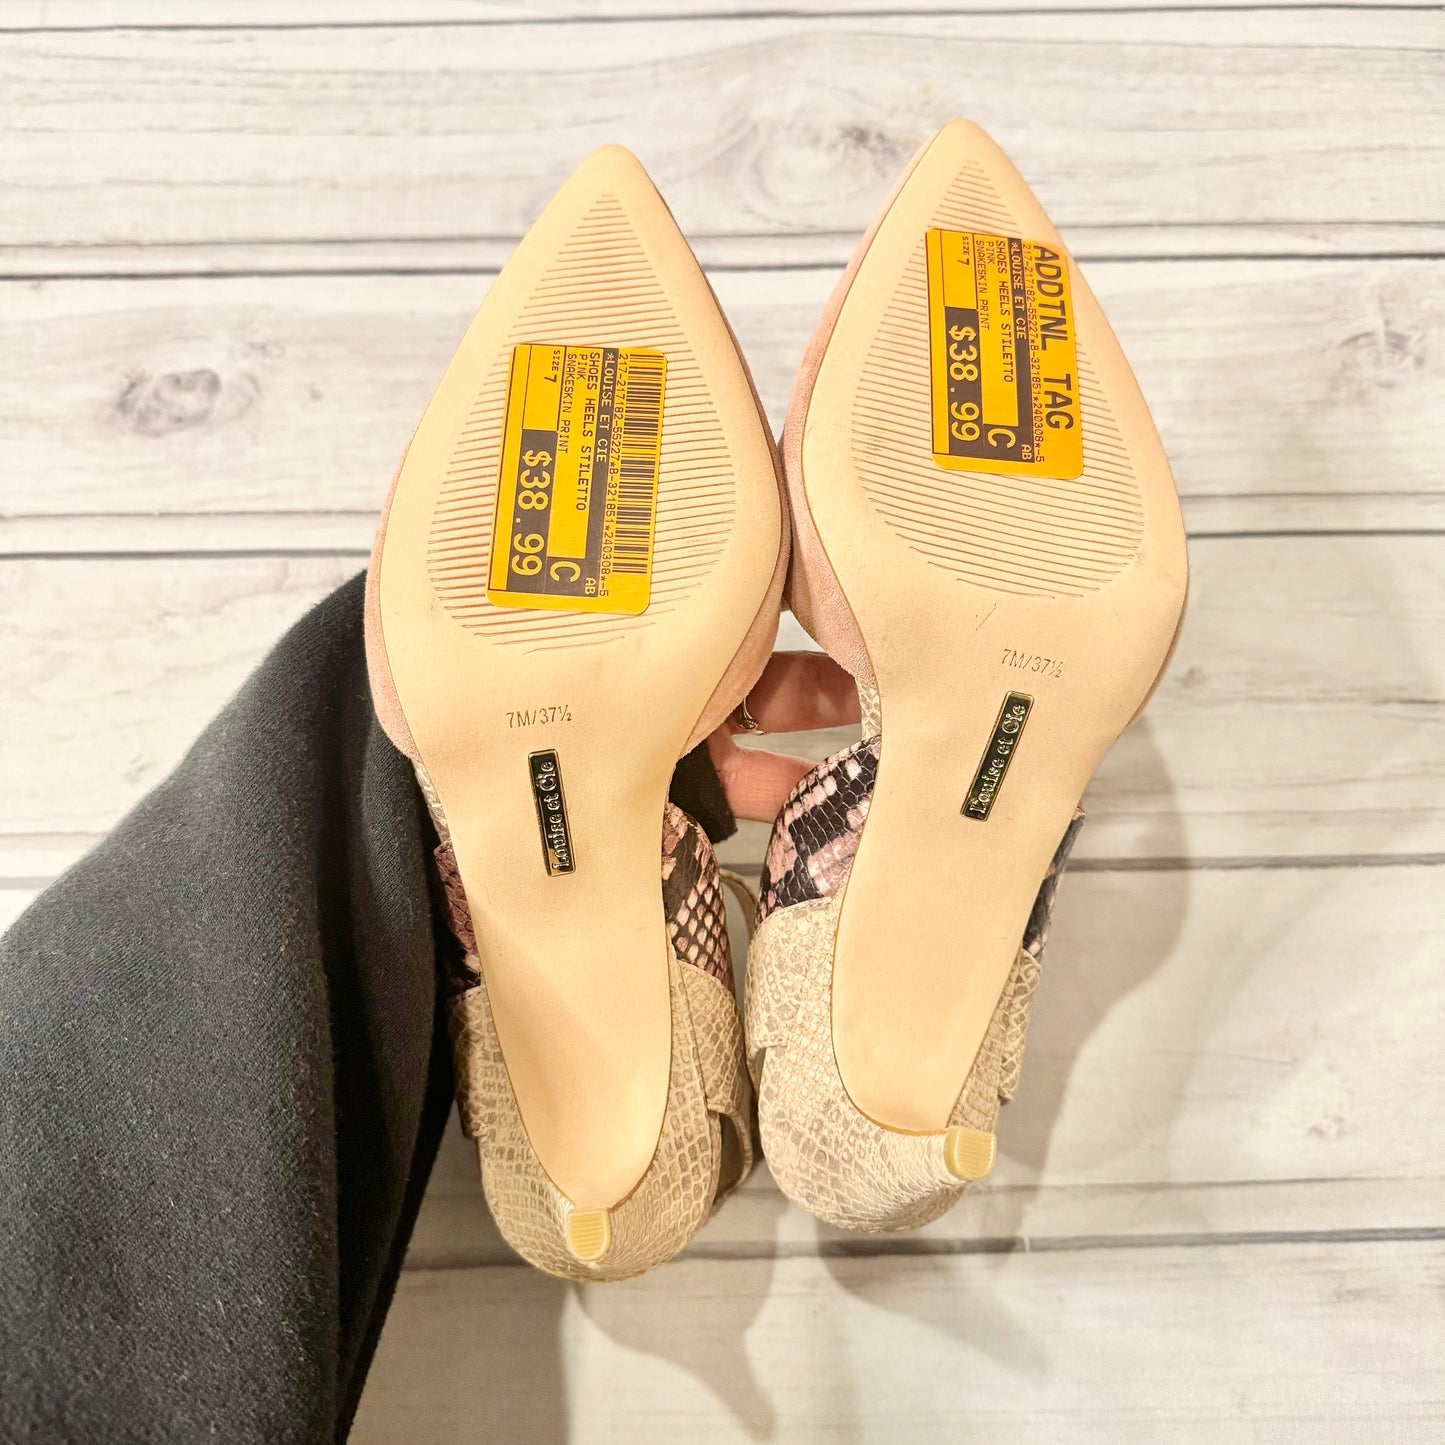 Shoes Heels Stiletto By Louise Et Cie  Size: 7